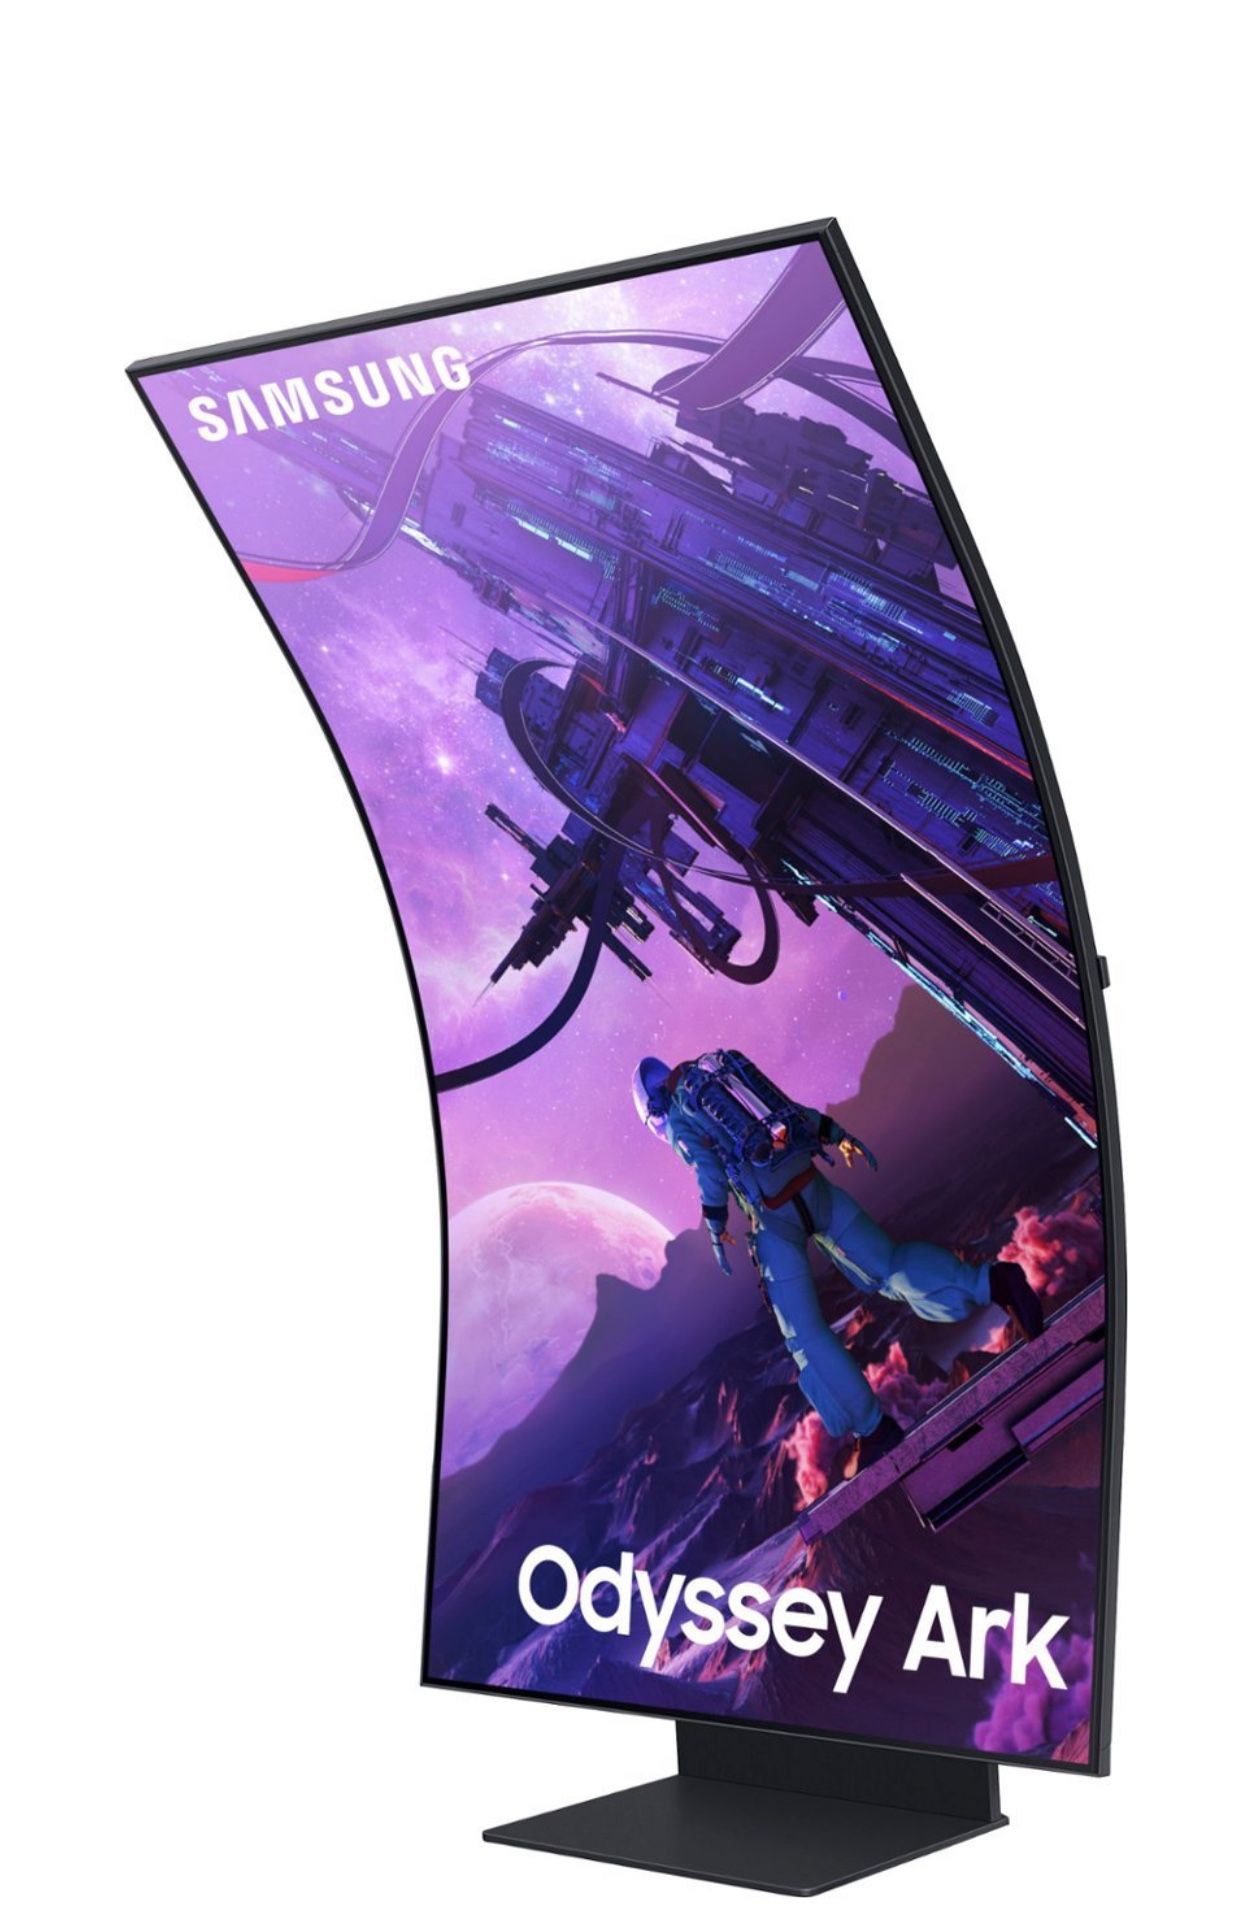 Samsung - Odyssey Ark 55” LED Curved 4K UHD Gaming Monitor - Black